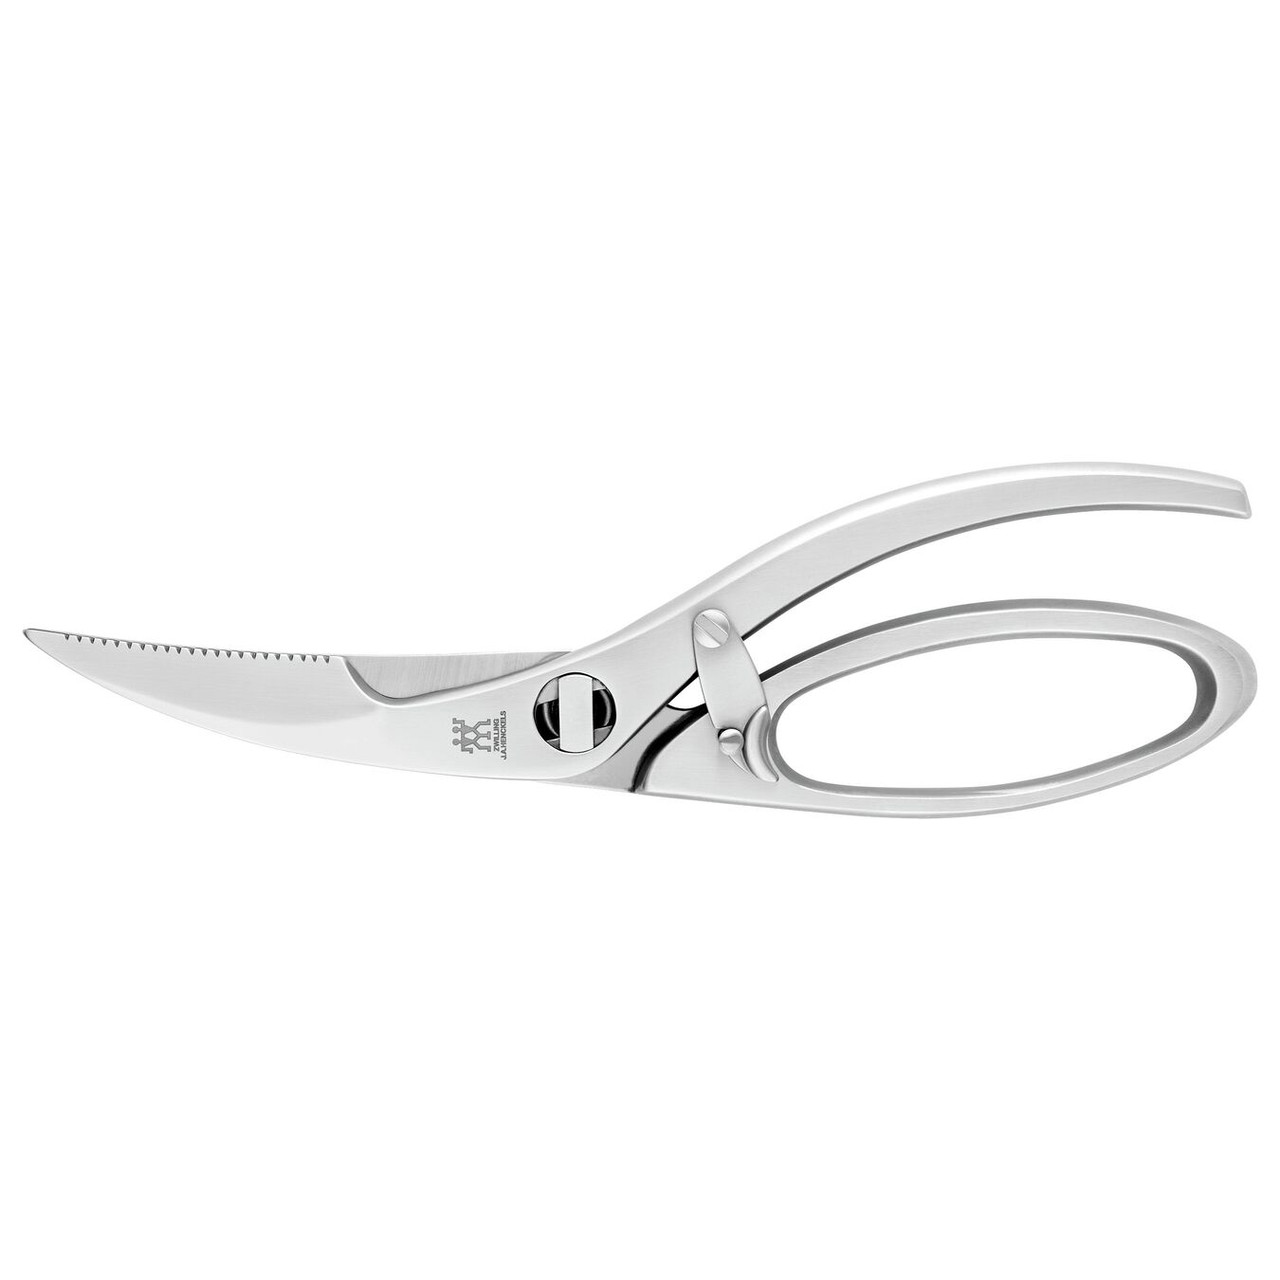 Henckels Multipurpose Detachable Kitchen Shears / Scissors